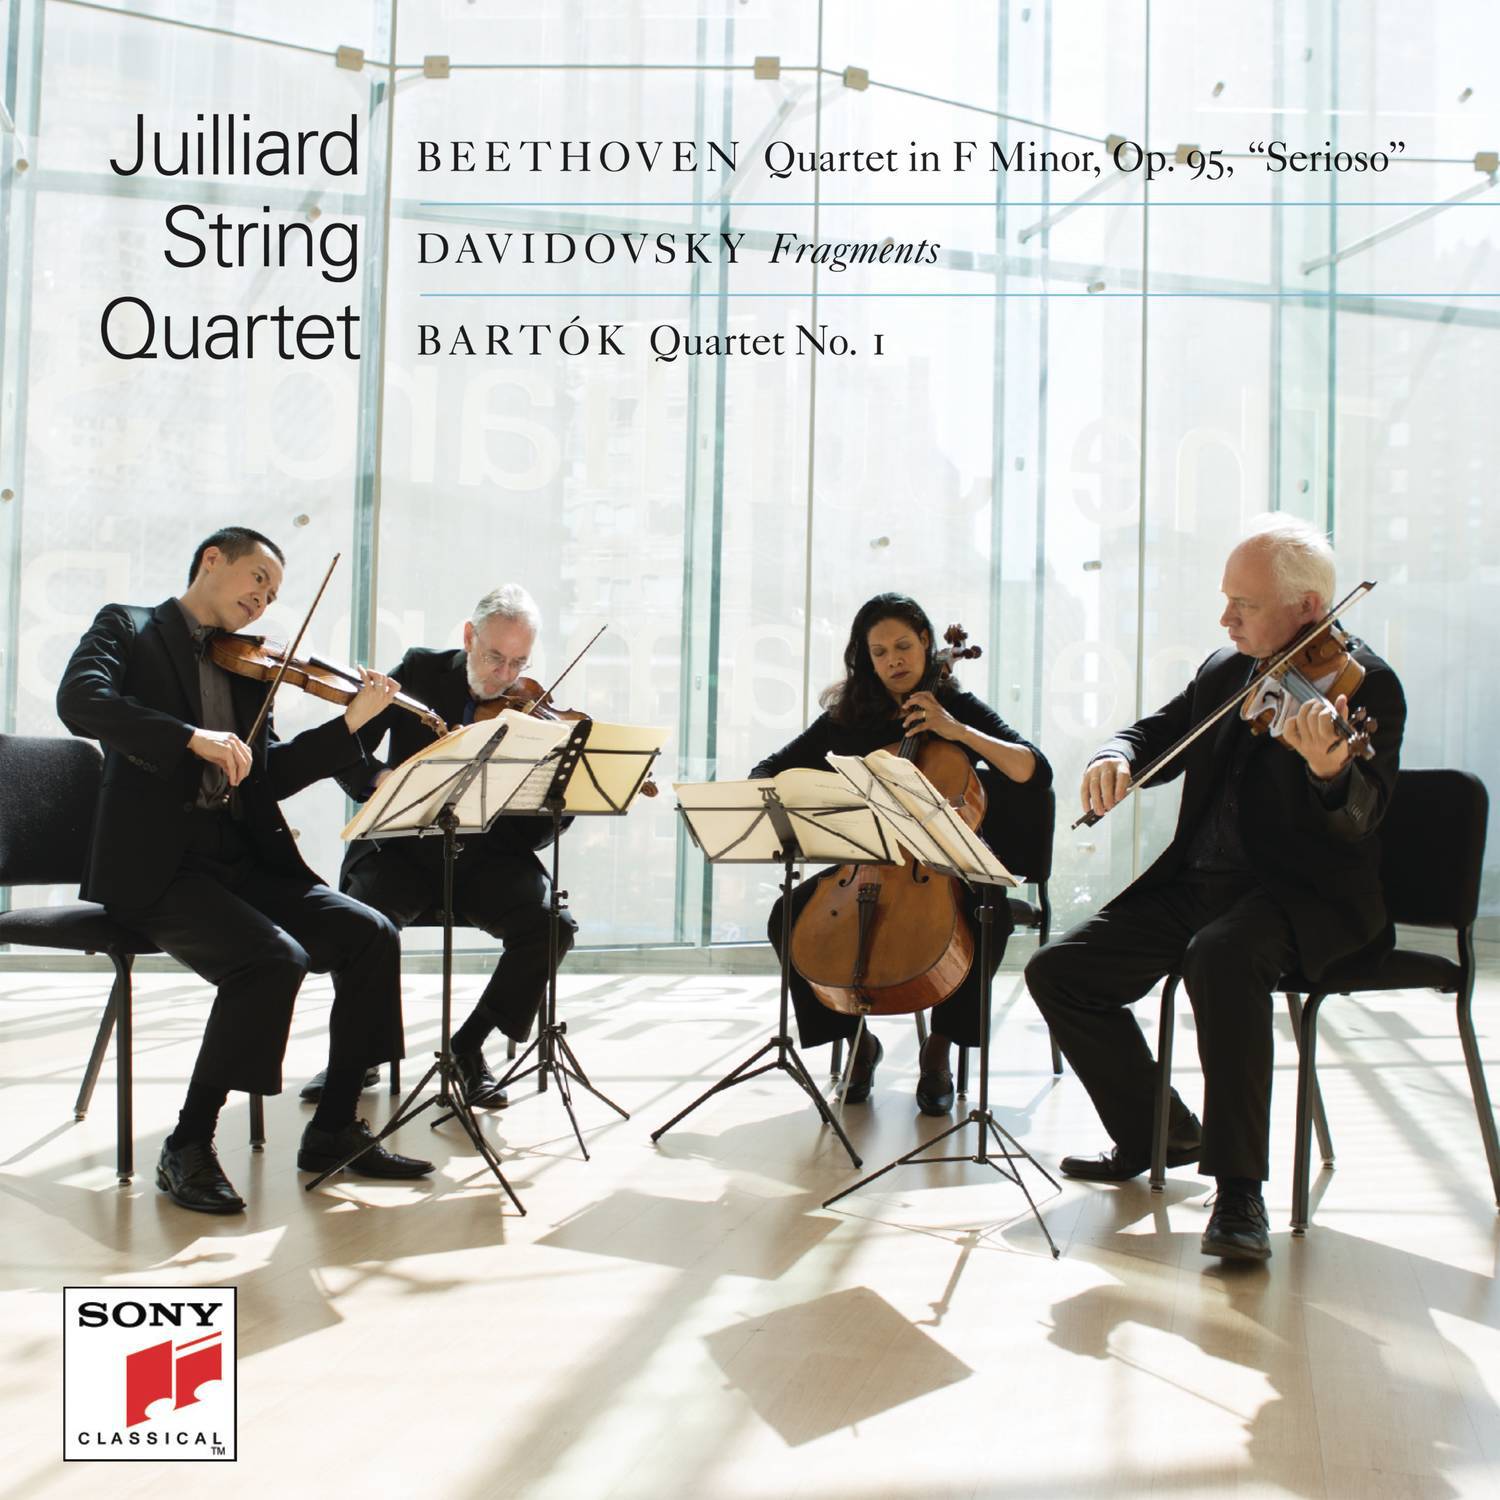 String Quartet in F Minor, Op. 95 "Serioso":I. Allegro con brio